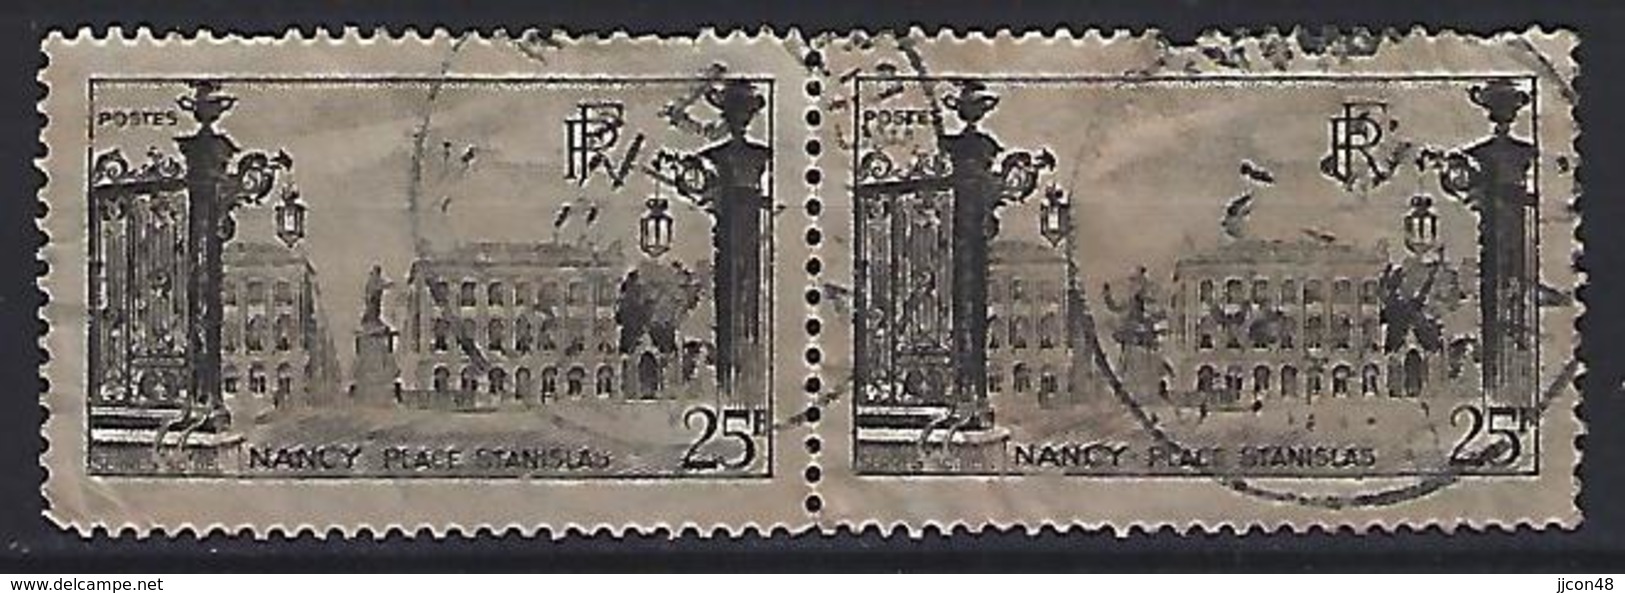 France 1947  Place Stanislas, à Nancy  (o) Yvert 778 - Used Stamps